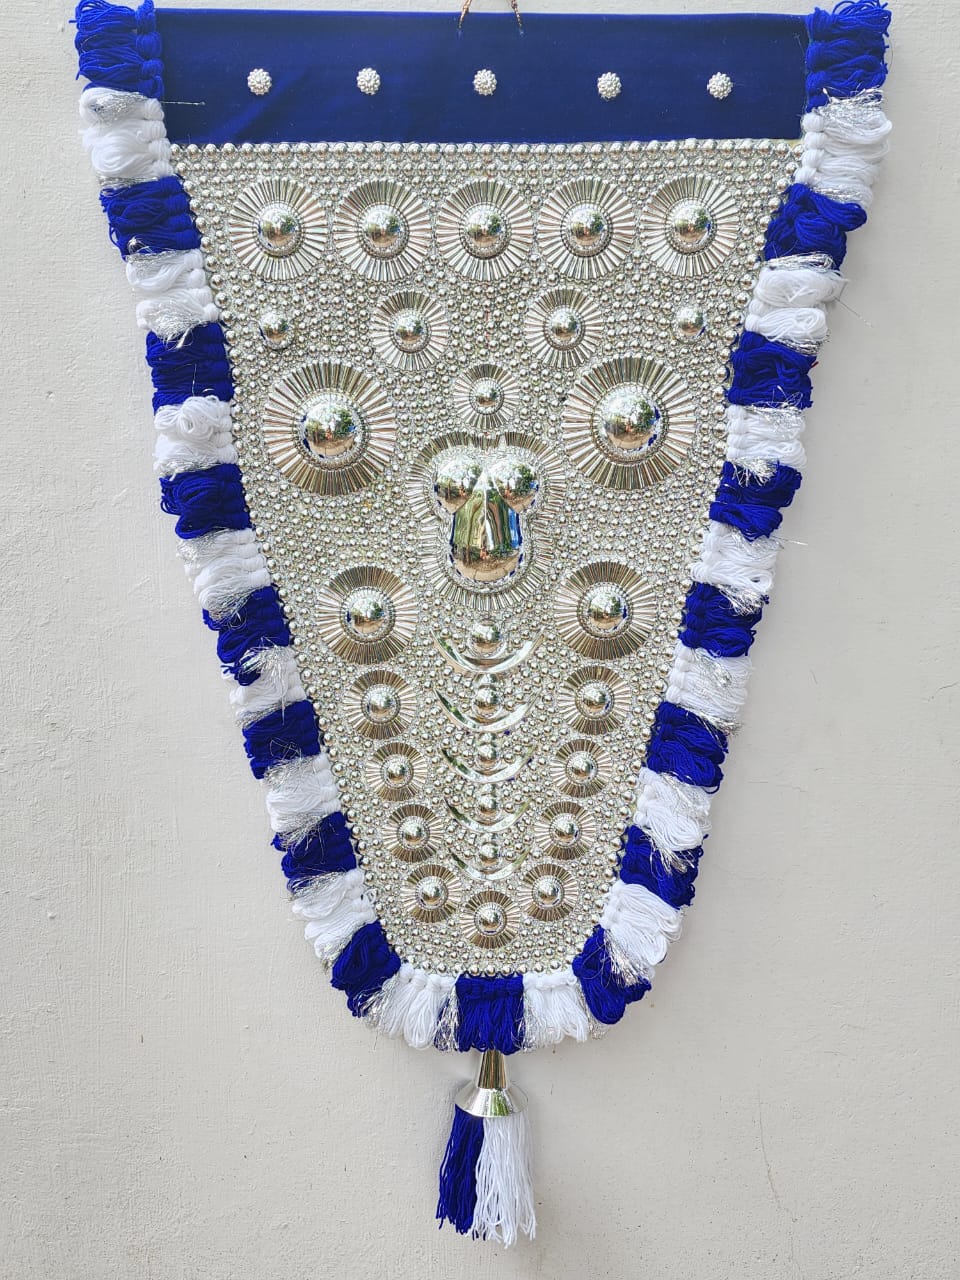 Mannar Craft Hand Made Nettipattam (Blue) With Silver Work-Elephant Caparison (blue) 2 Feet